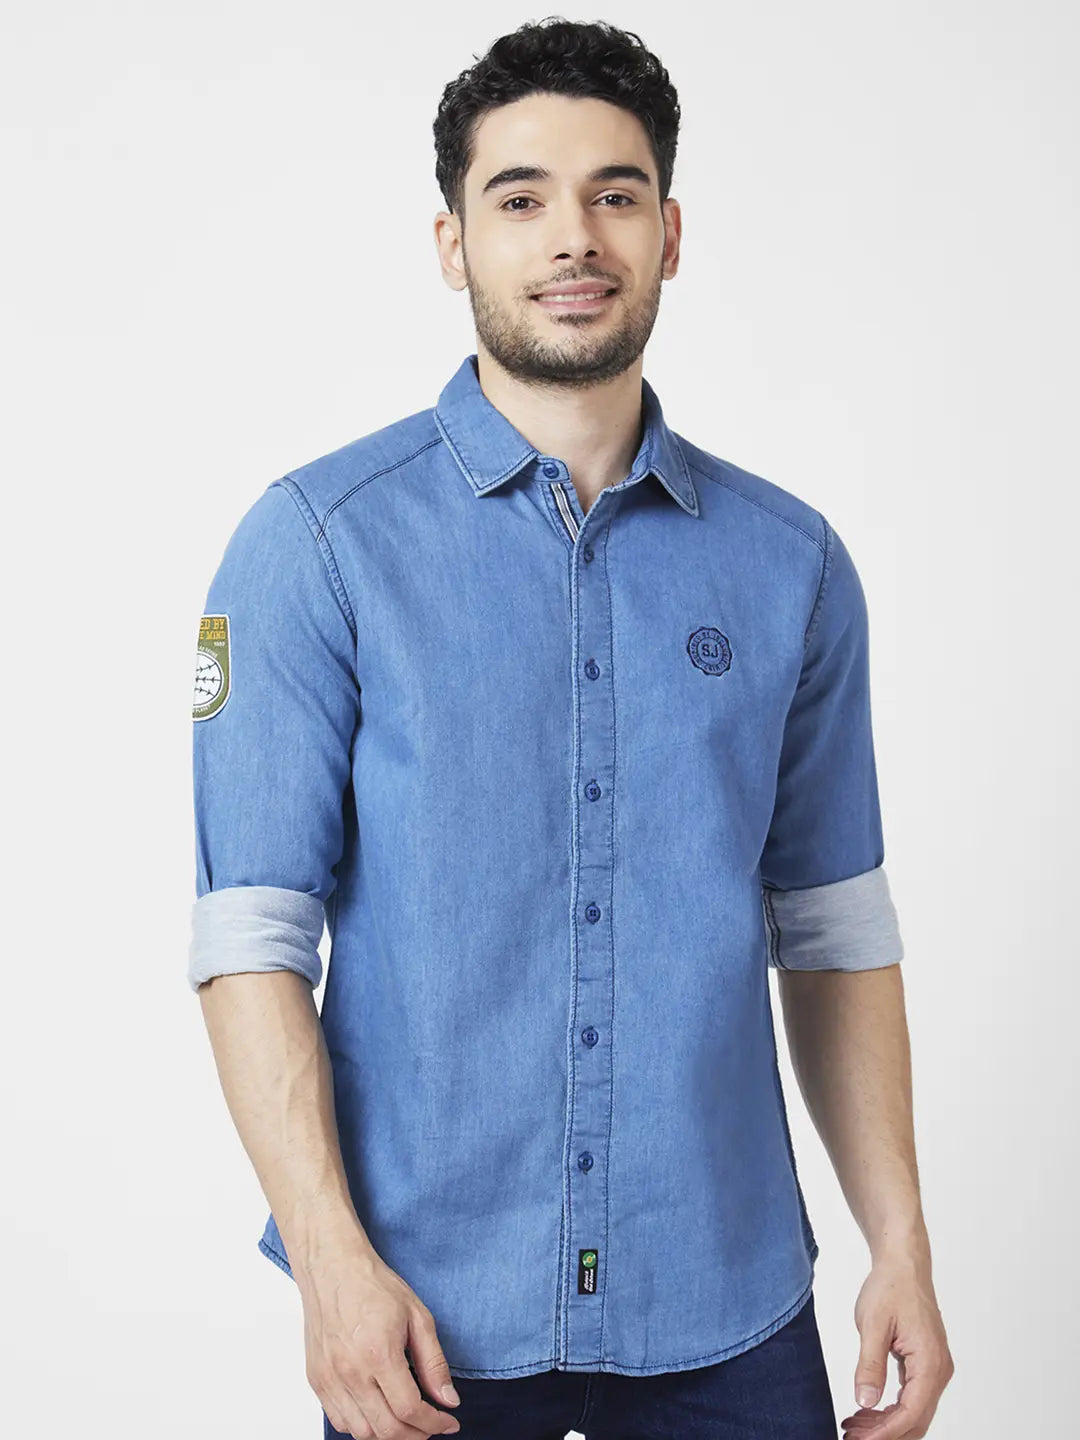 Men's Denim Sky Blue Regular Fit Shirt/ Cotton denim men's shirts/Men's  Solid Regular Fit Casual Shirt /Soft and Breathable 100% Cotton Fabric